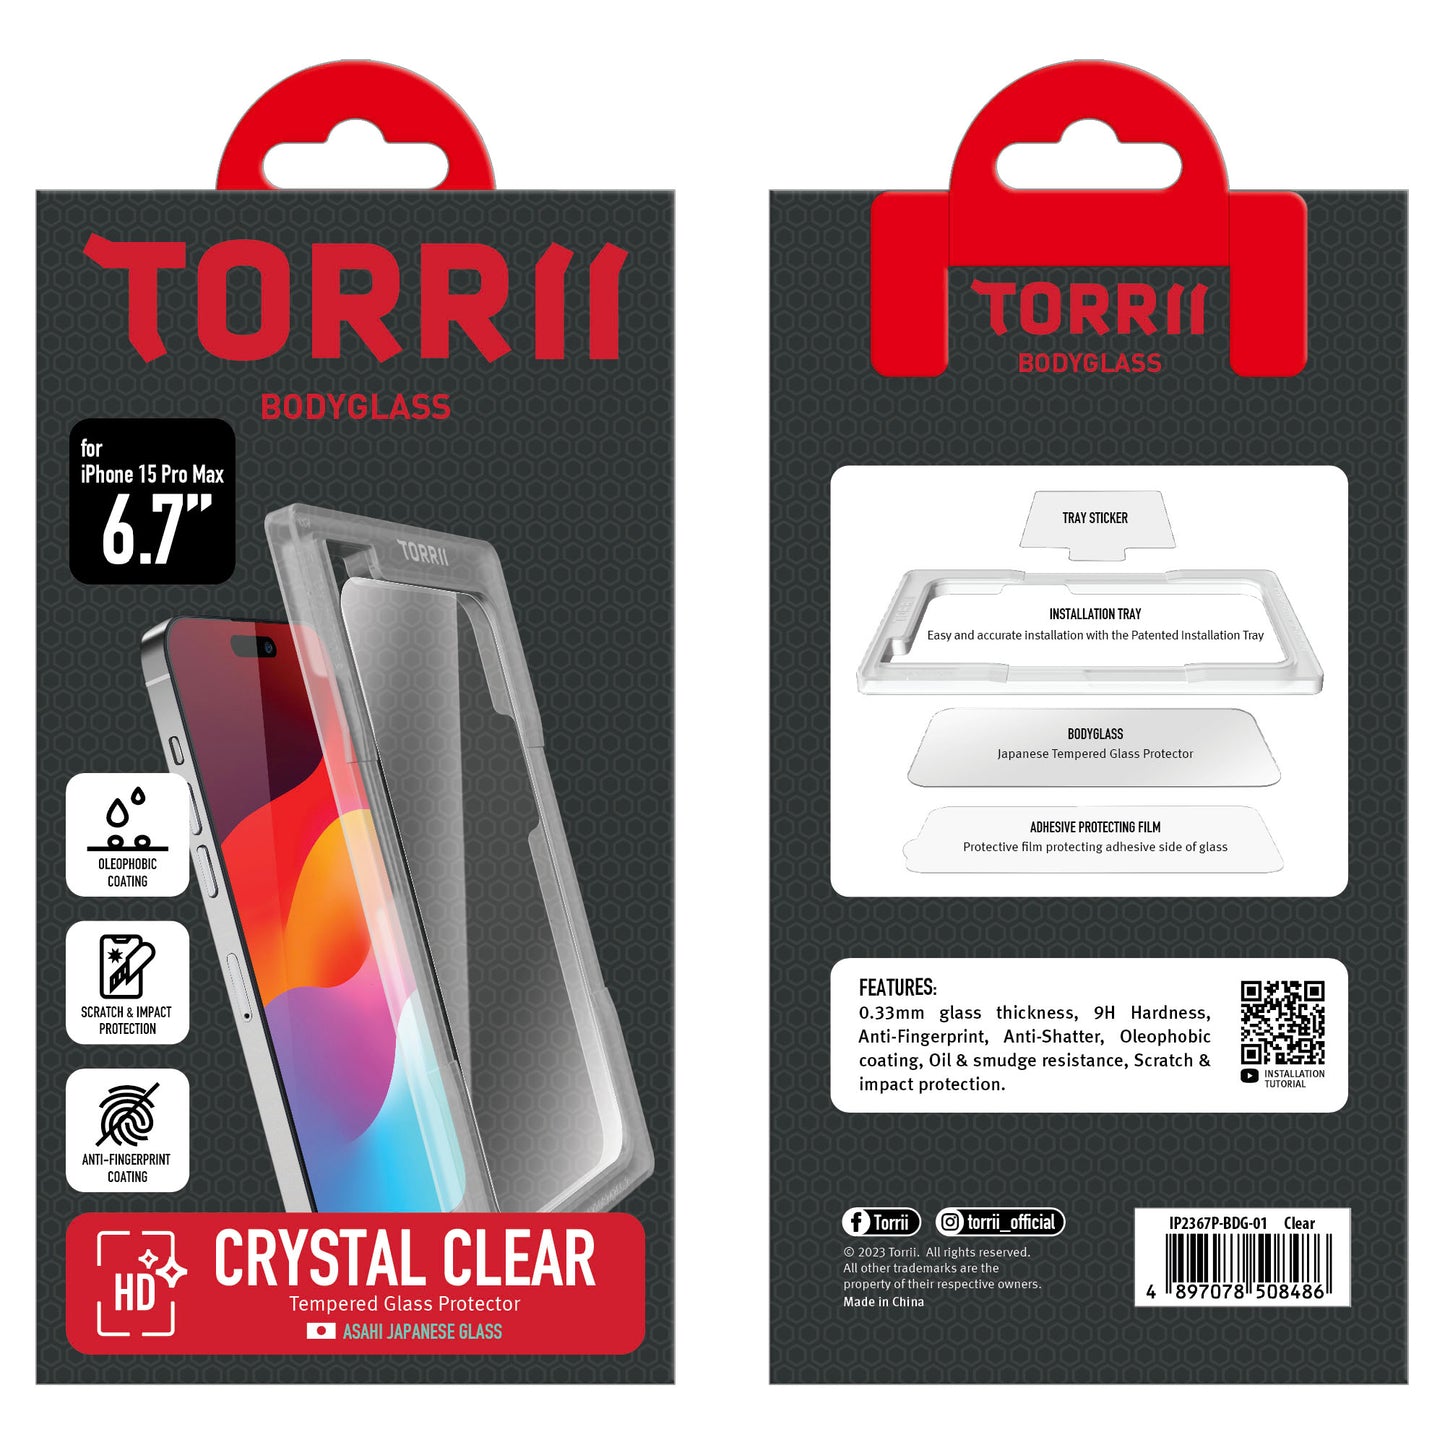 Torrii BODYGLASS 玻璃保護貼 for iPhone 15 Pro Max